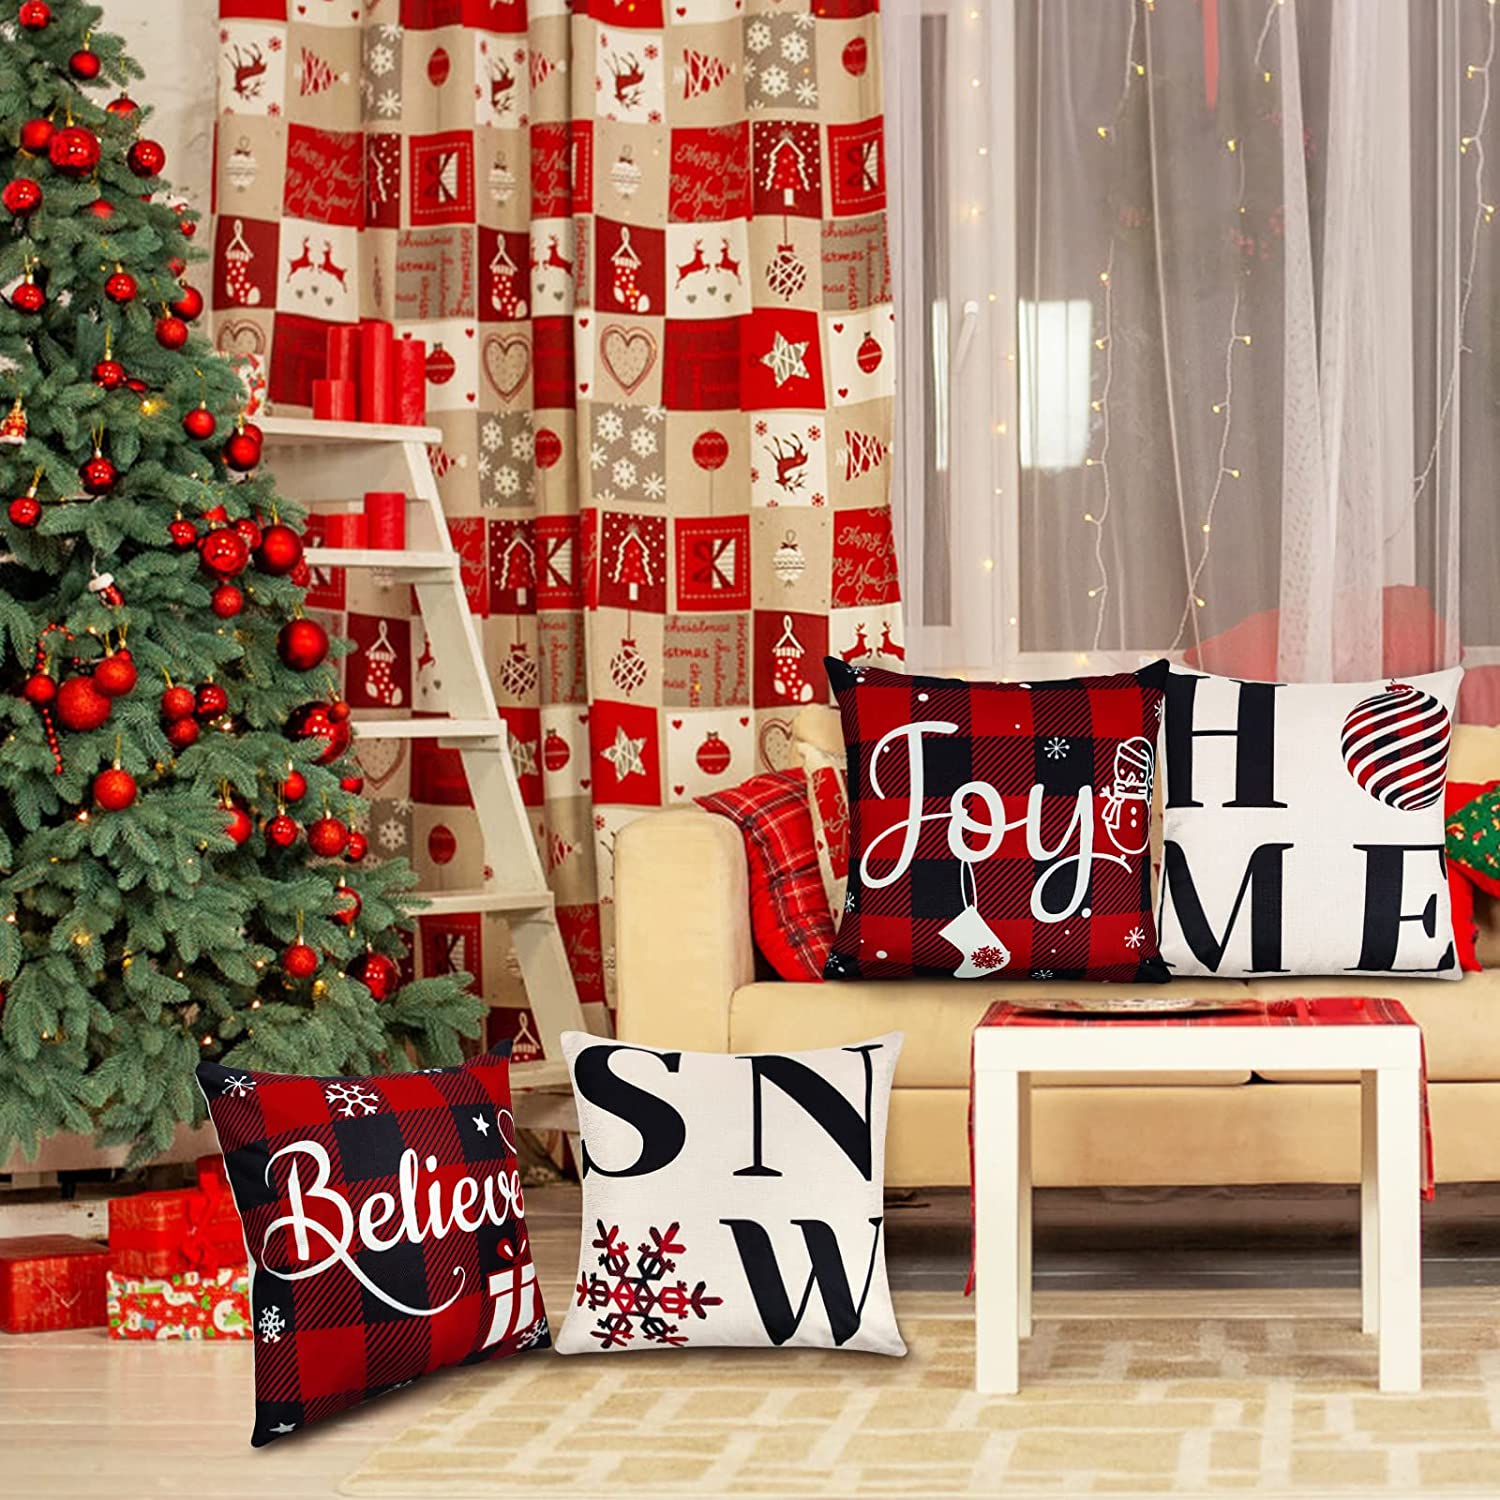 Ouddy Home Christmas Pillow Covers 18x18 Set of 4, Buffalo Plaid Christmas Throw Pillows Cases